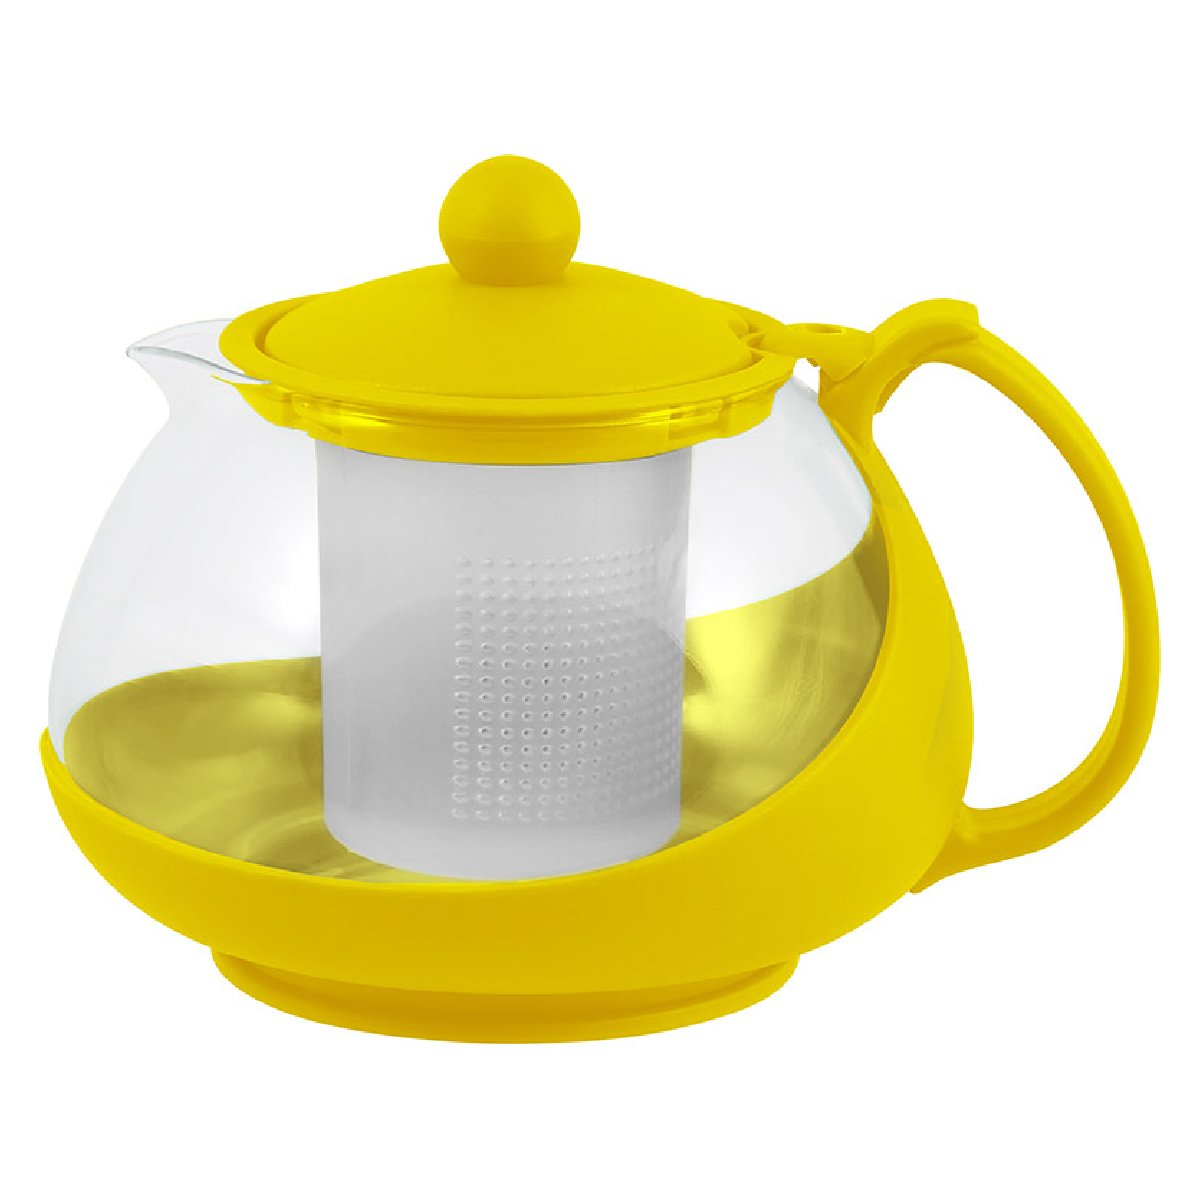 Чайник заварочный Mallony PTP-20-750ML 0.75л (910105)